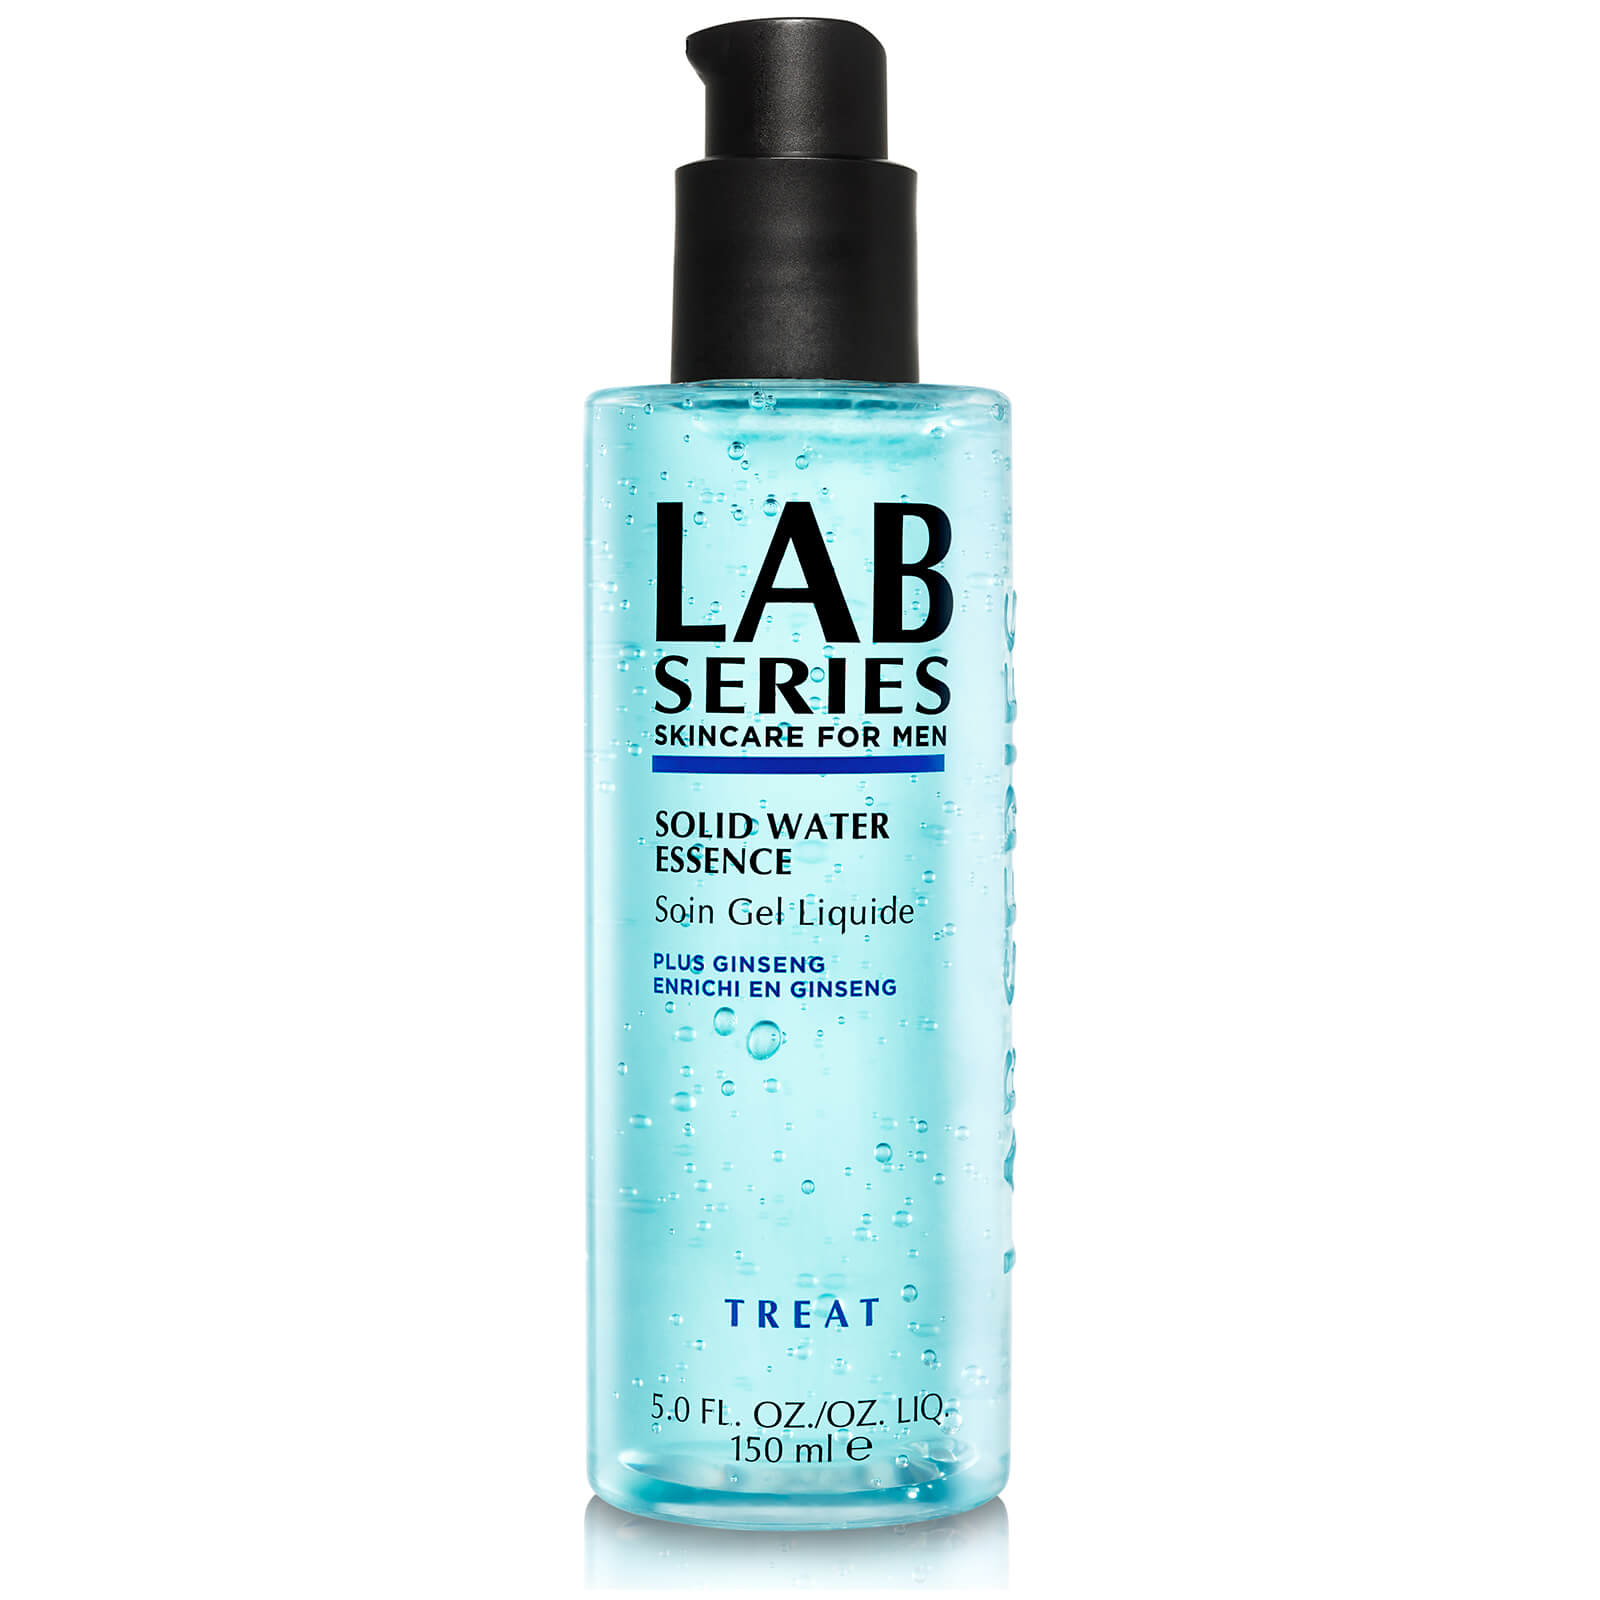 Agua sólida Solid Water Essence de Lab Series Skincare for Men 150 ml